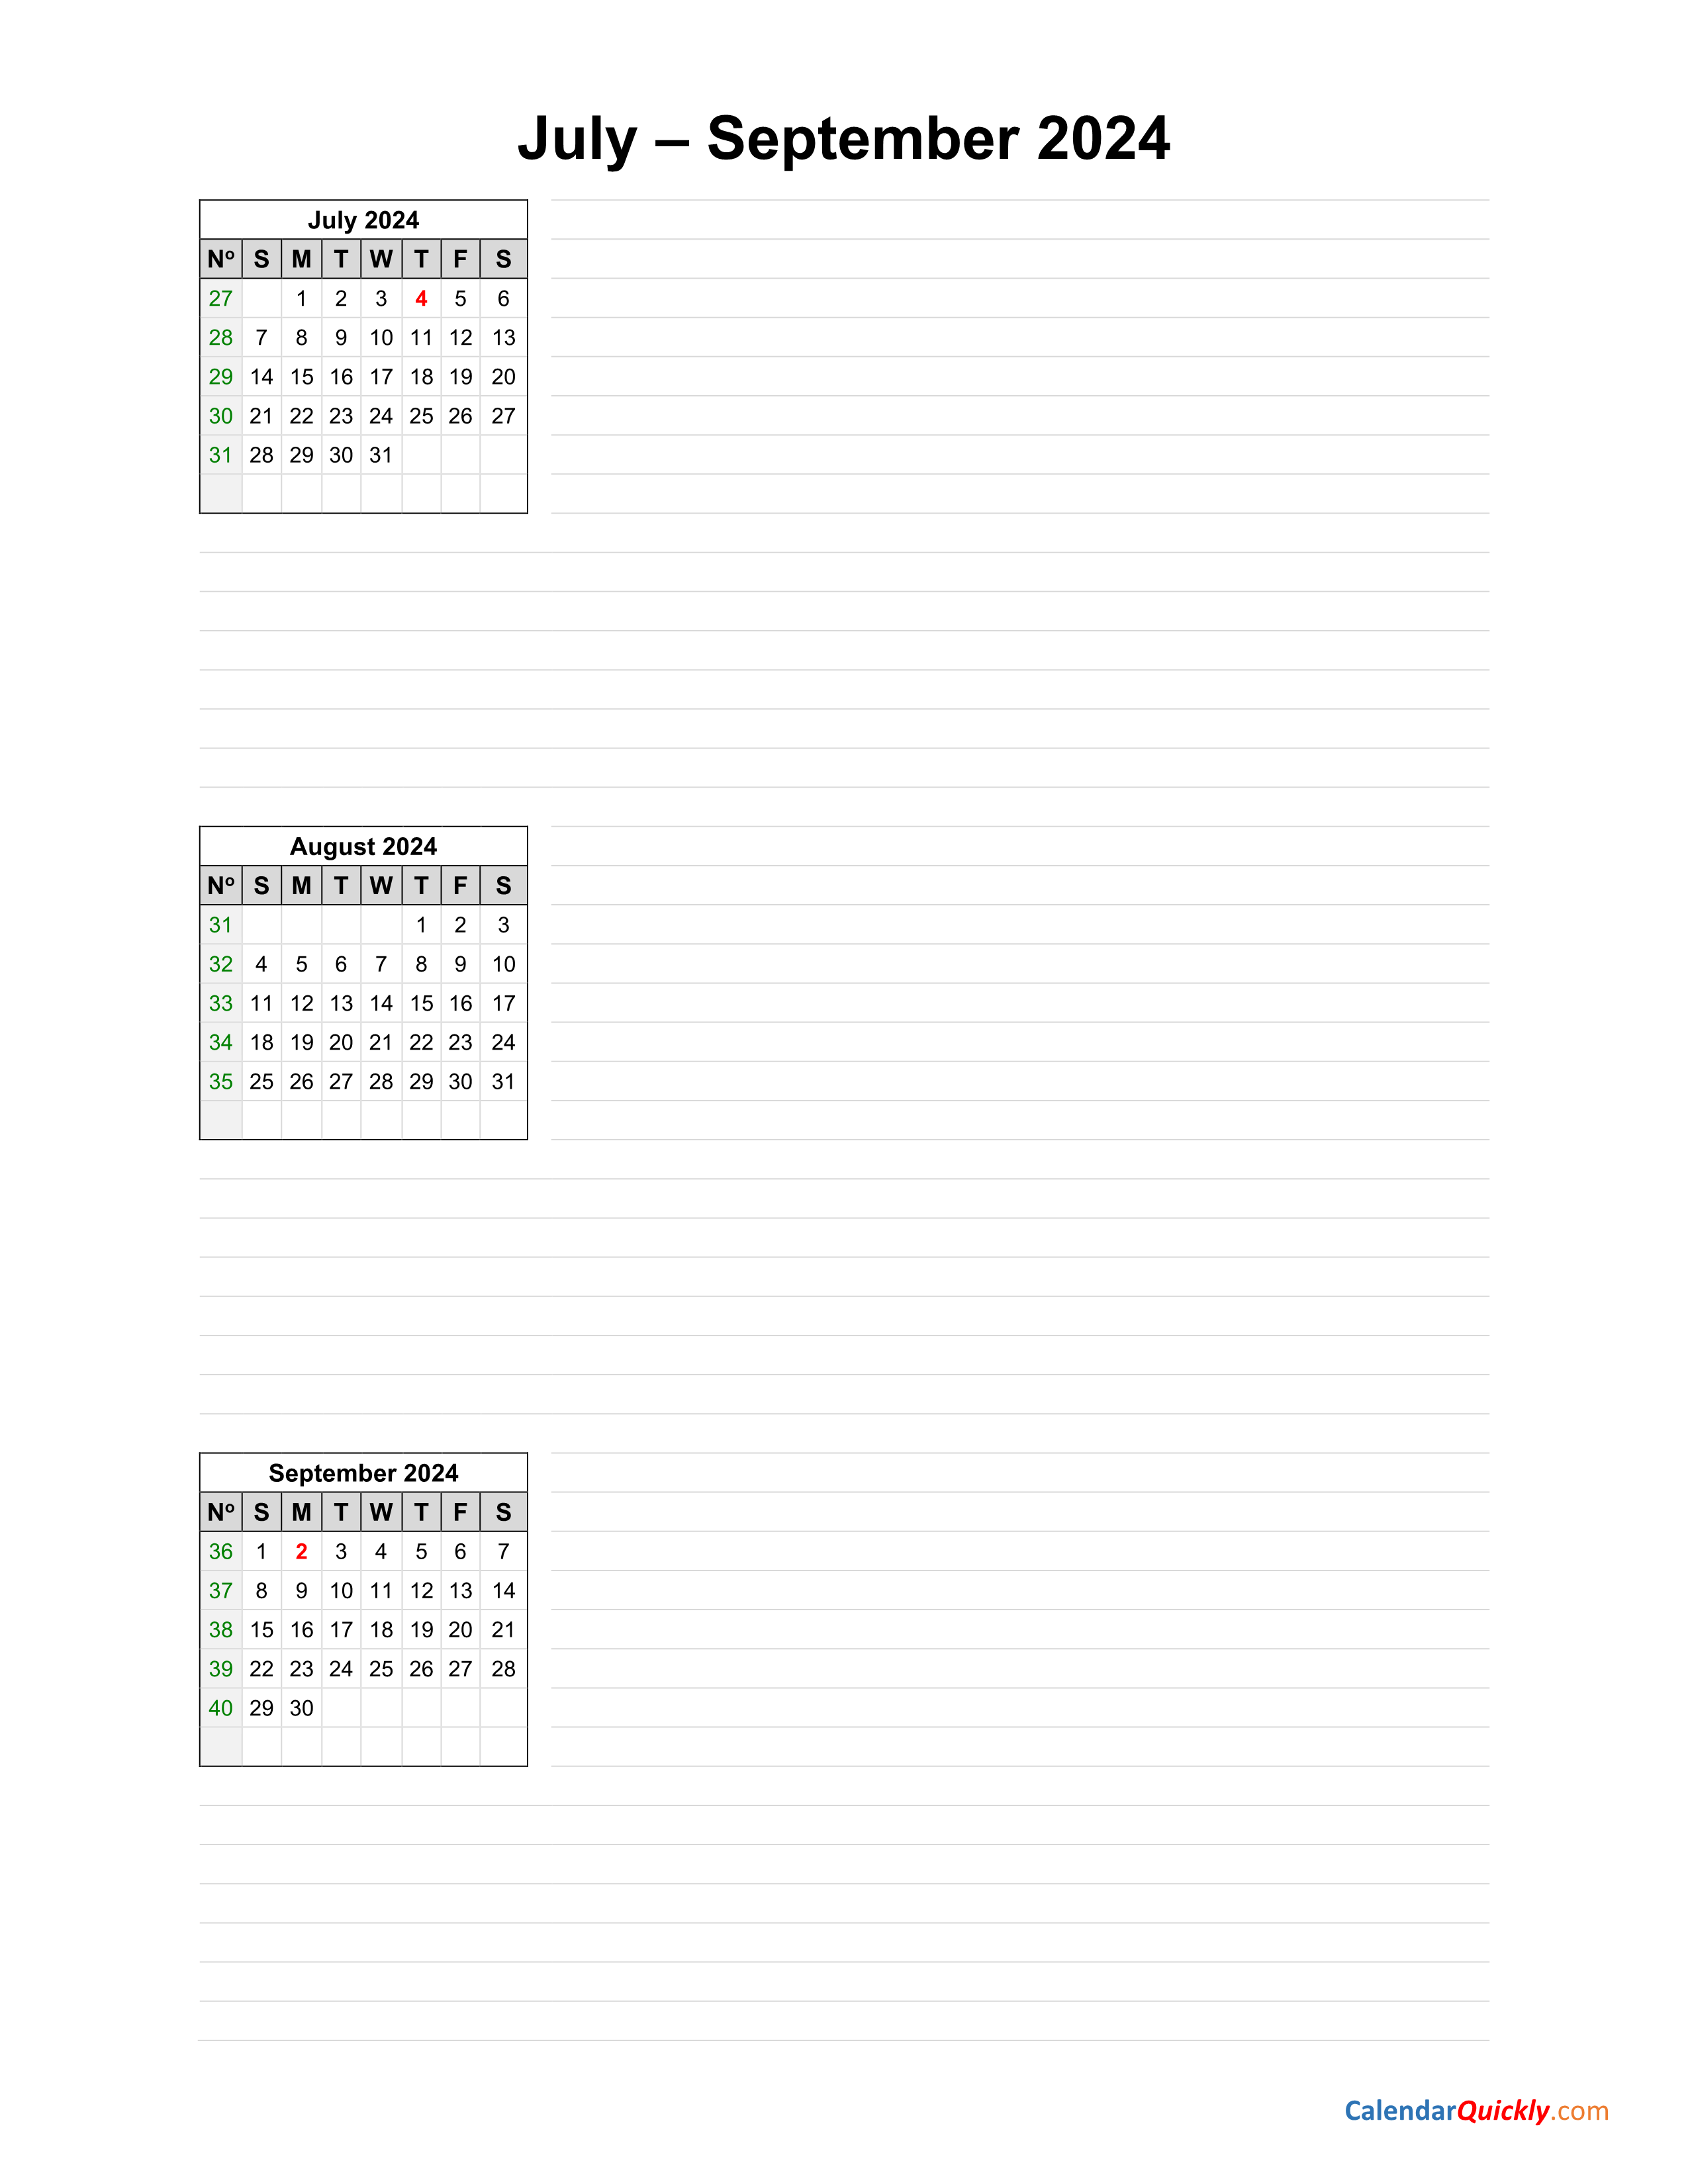 July to September 2024 Calendar | Calendar Quickly